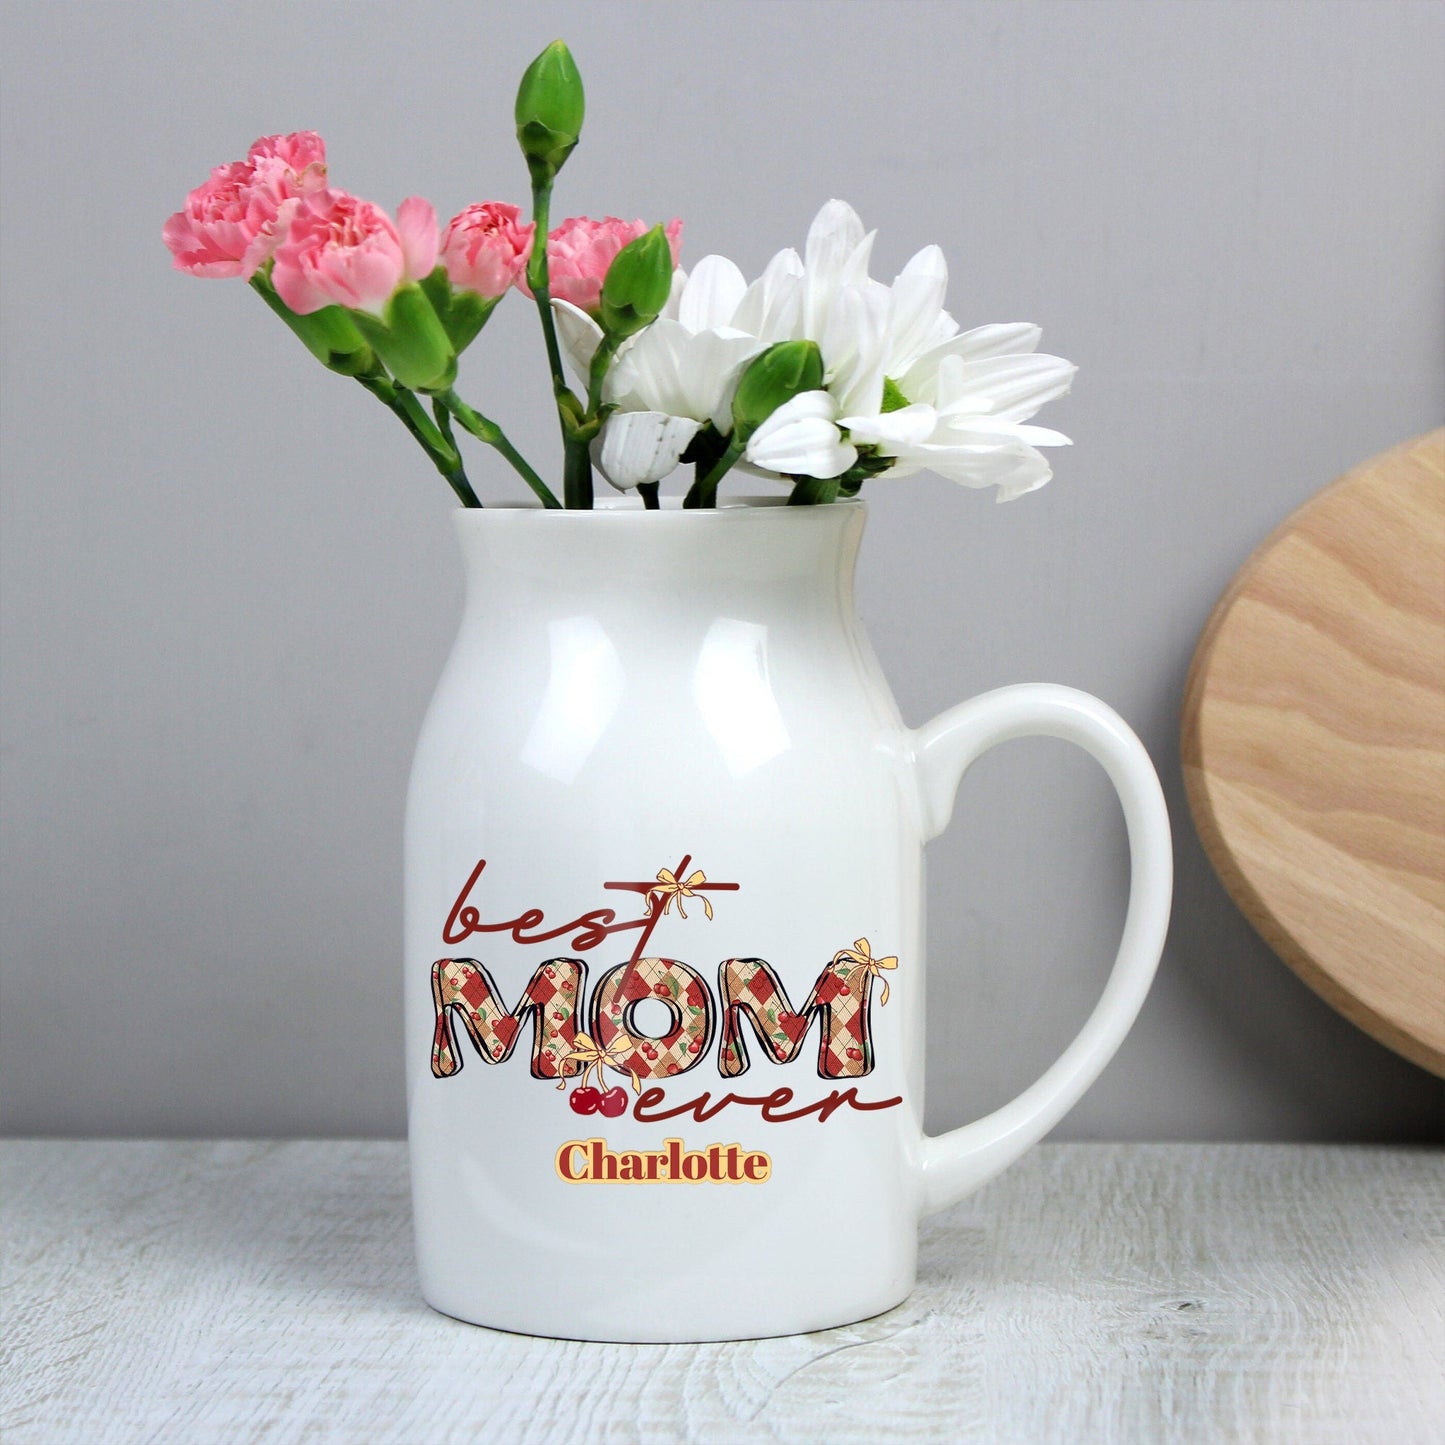 Copy of Custom Plant Pot Gift for Mom- P2